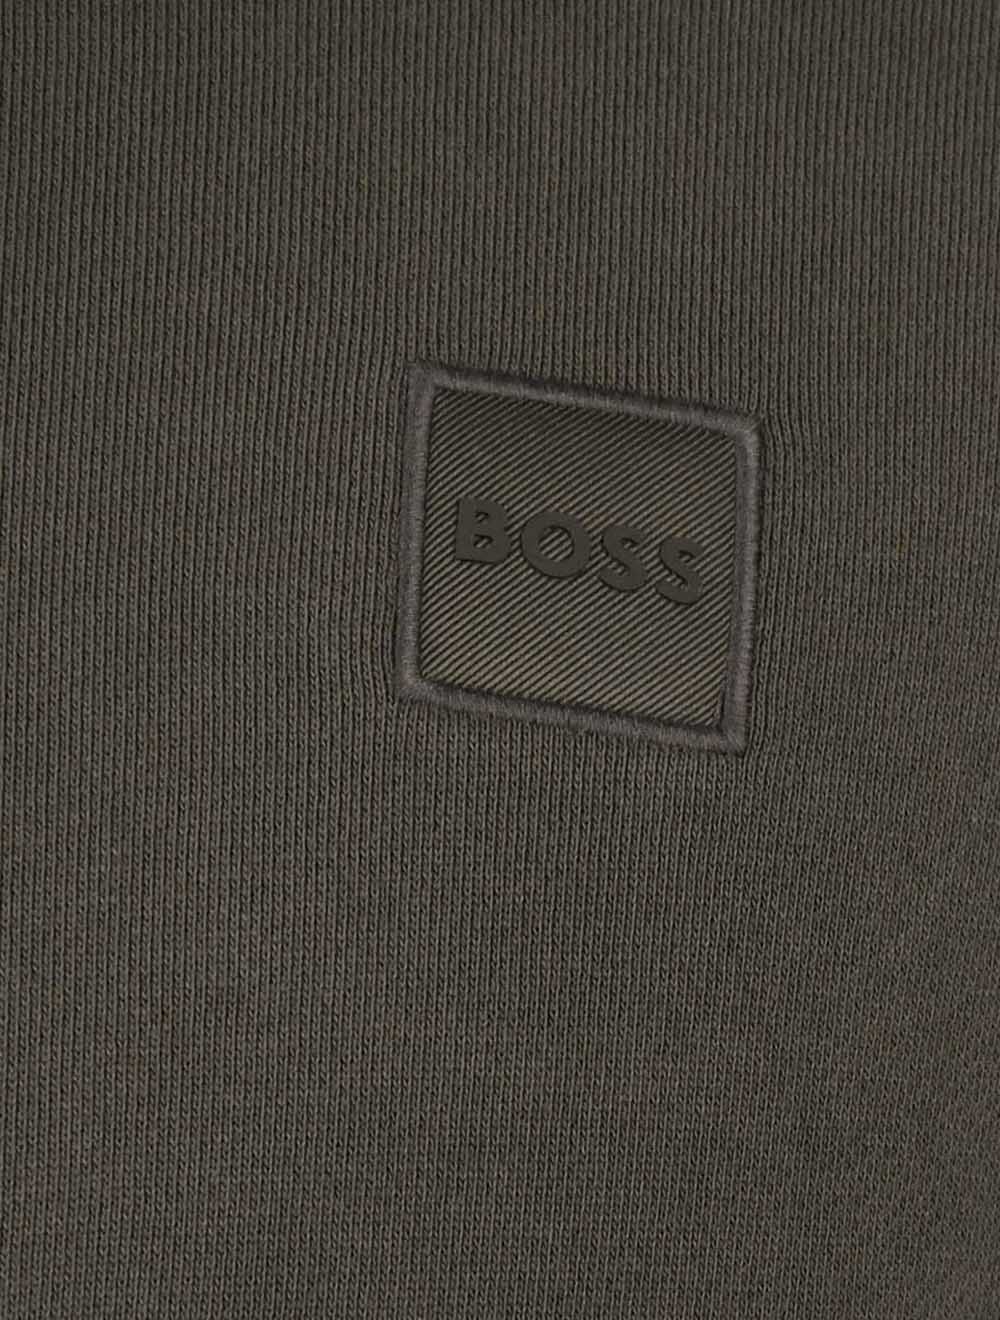 Hugo Boss Green Cotton Sweater